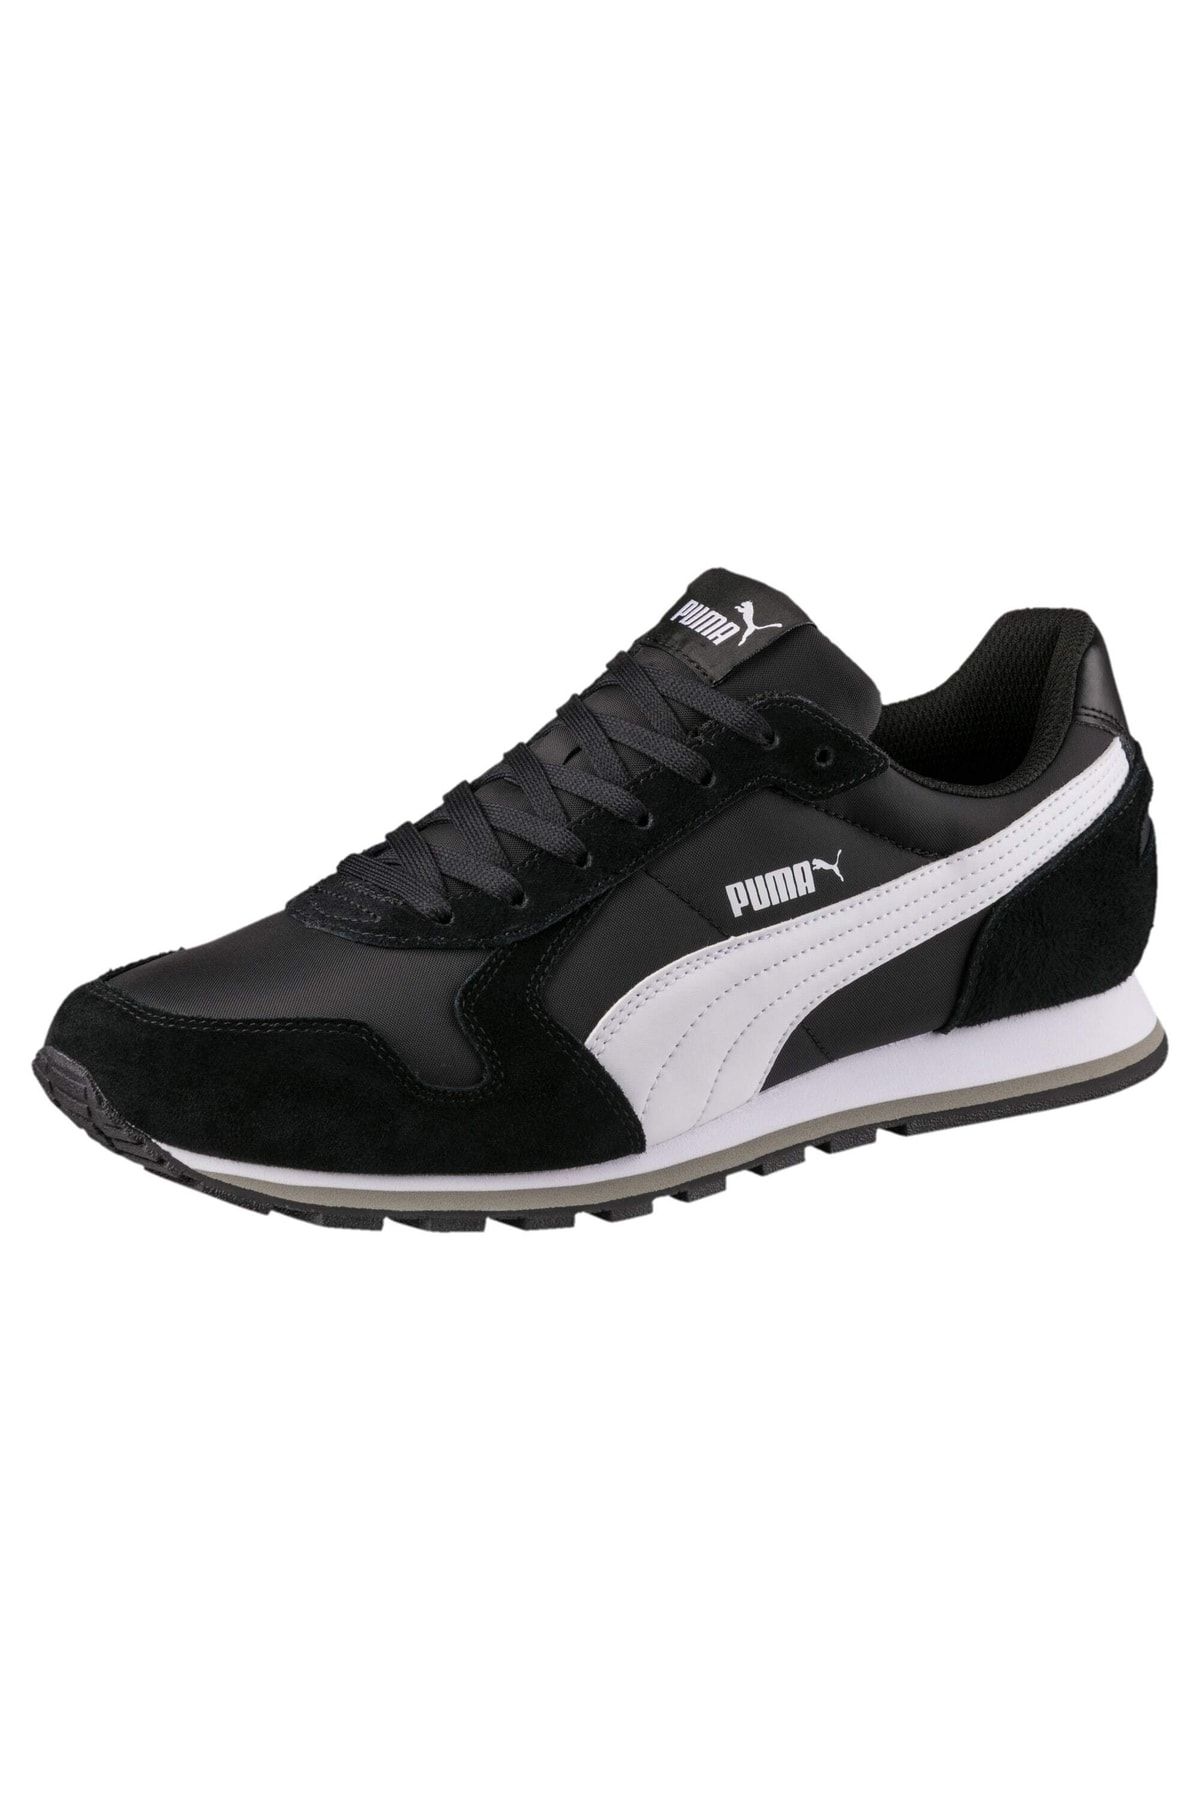 Puma Unisex Siyah St Runner Nl Siyah-beyaz Sneaker Ayakkabı 100231415